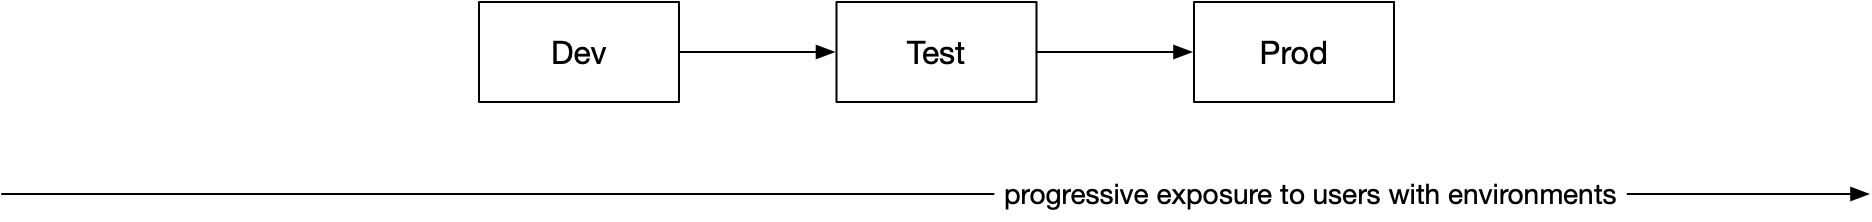 Diagram of software deployments in a dev, test, prod model.